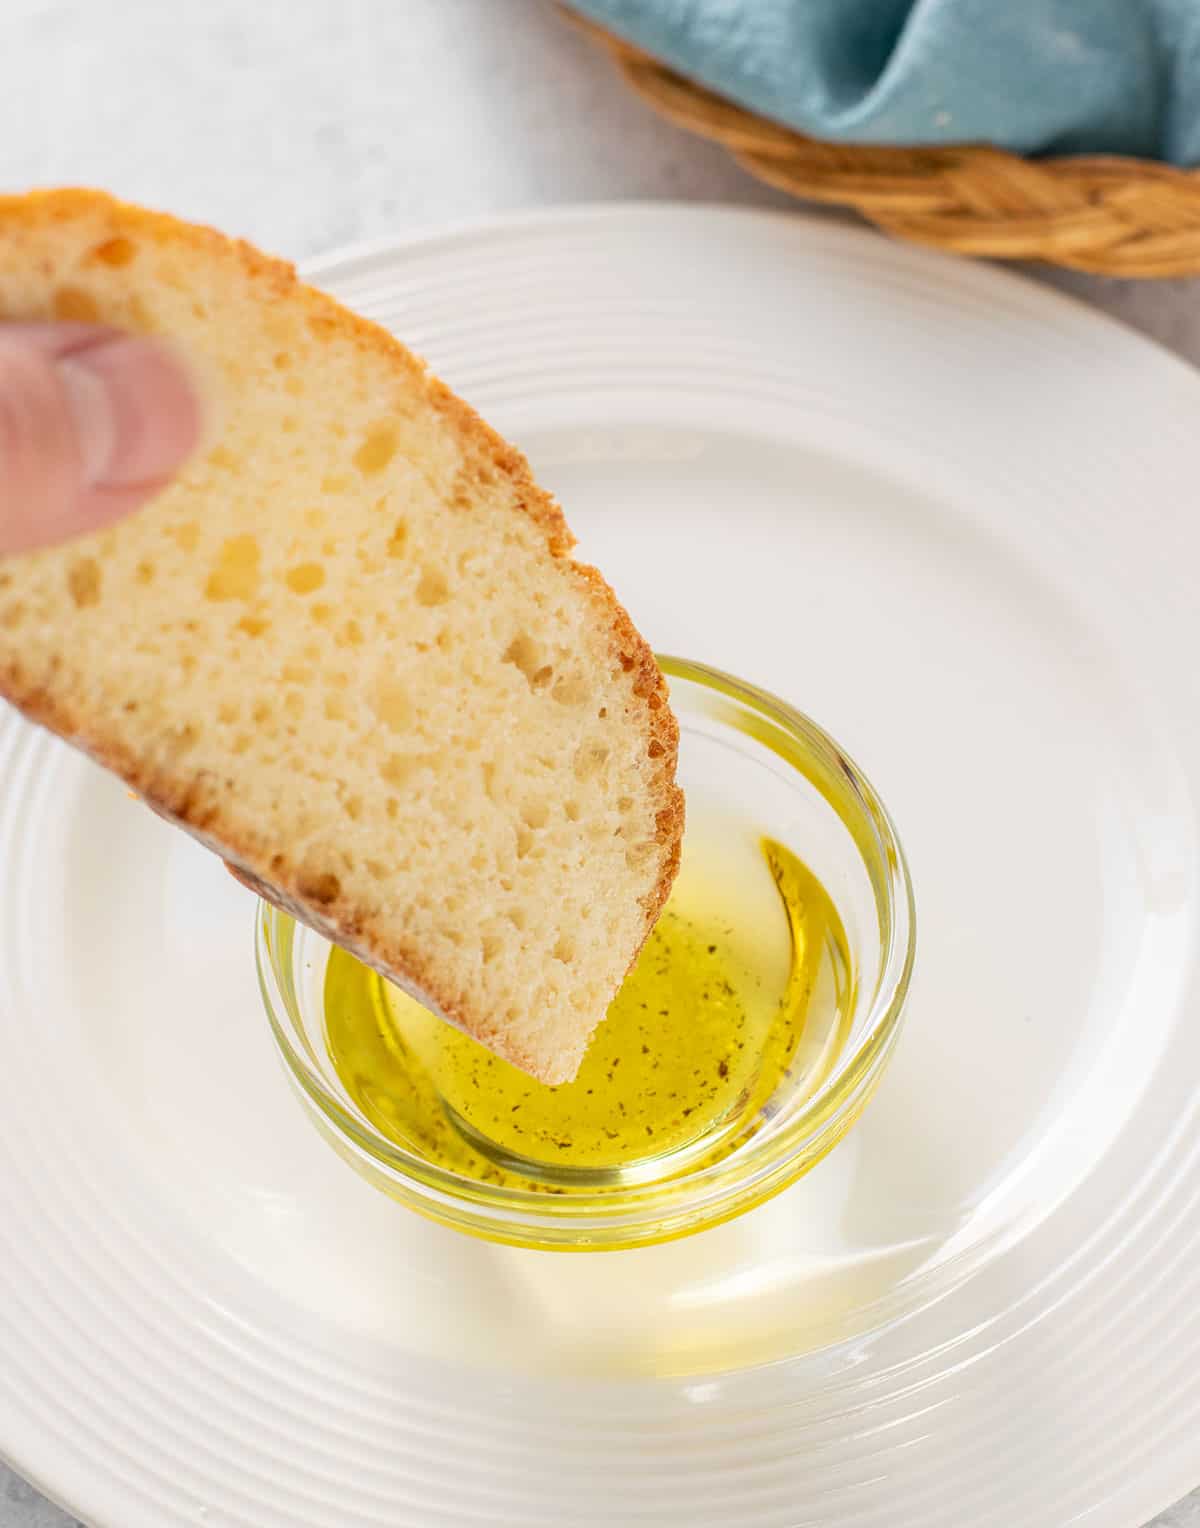 slice of italian bread dipped in seasoned oil